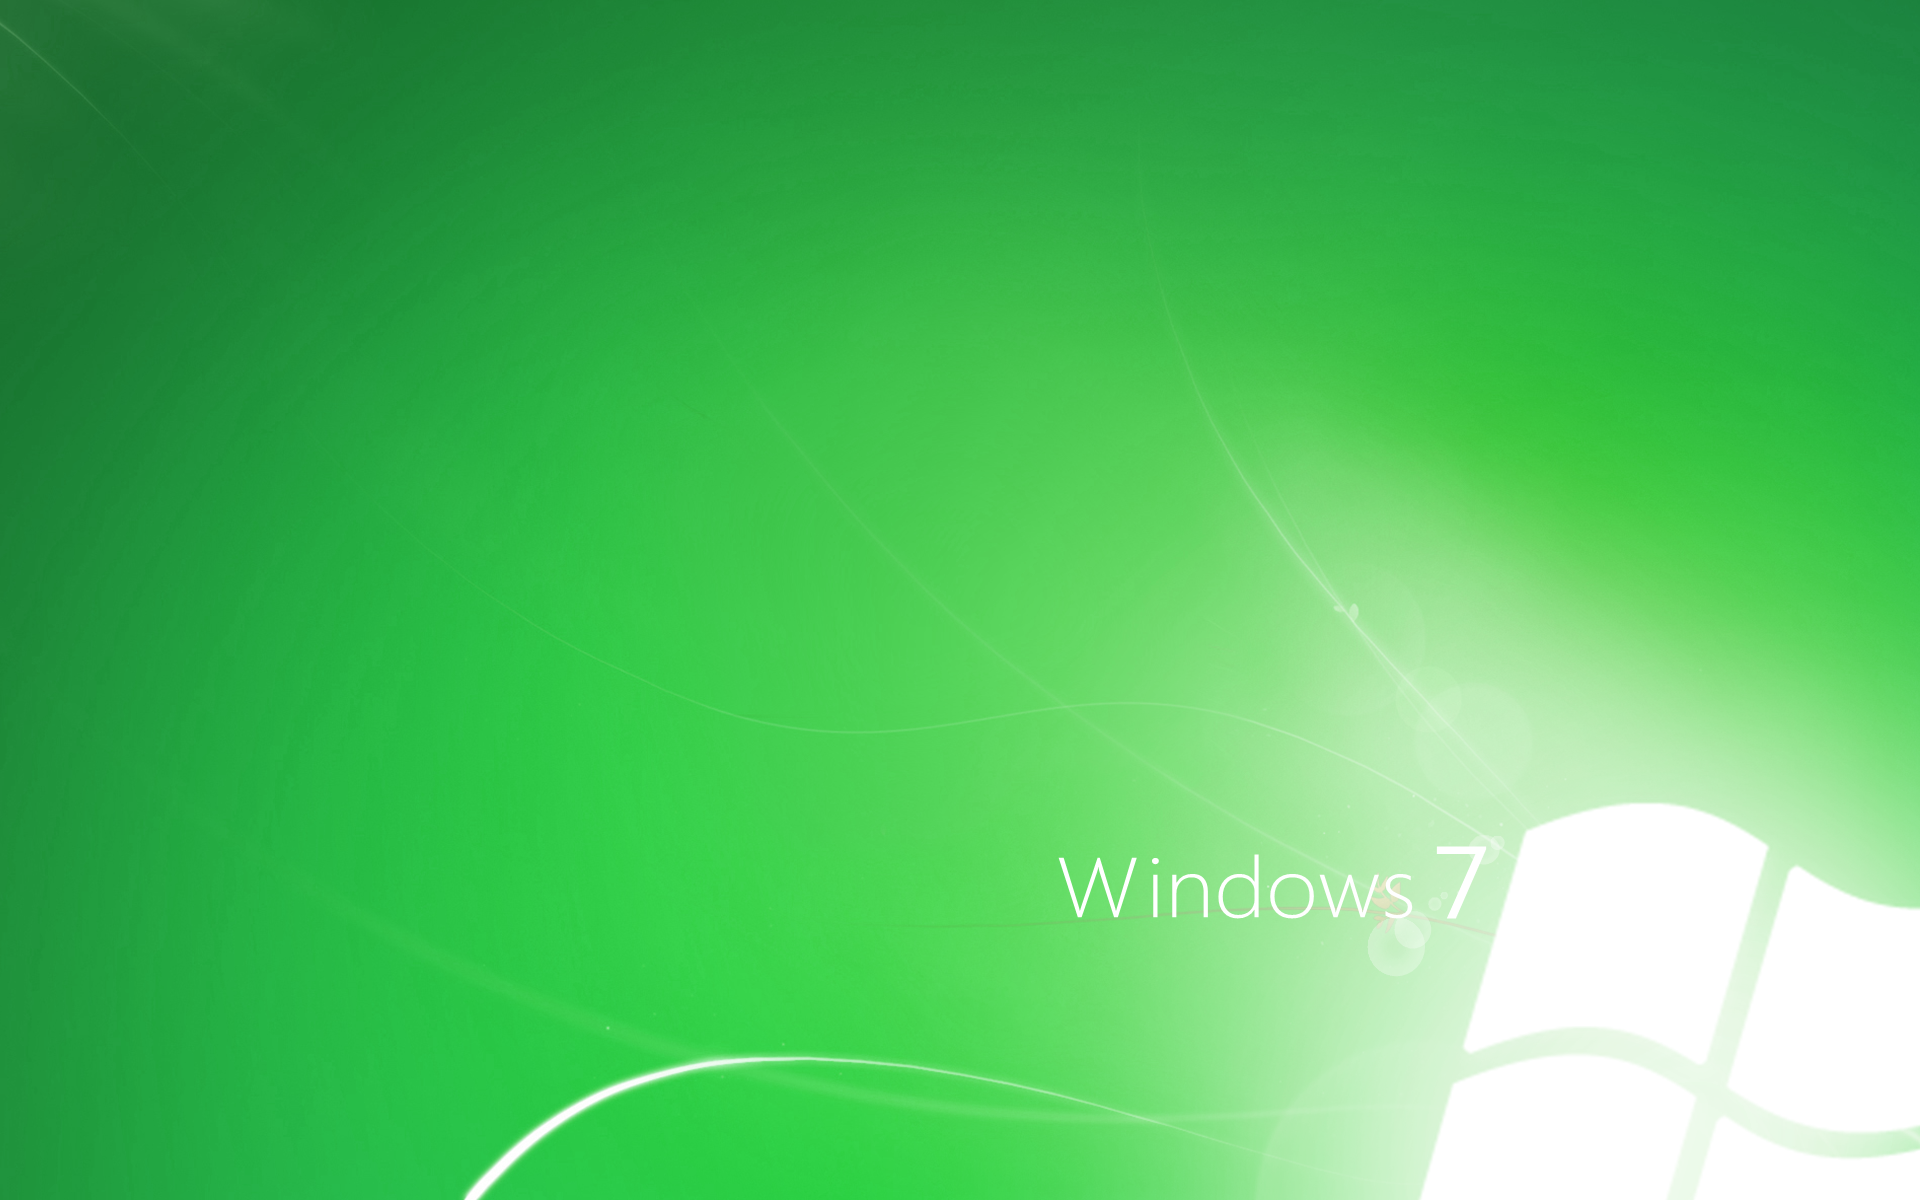 Windows 7 Ligth Green by CaHilART on DeviantArt